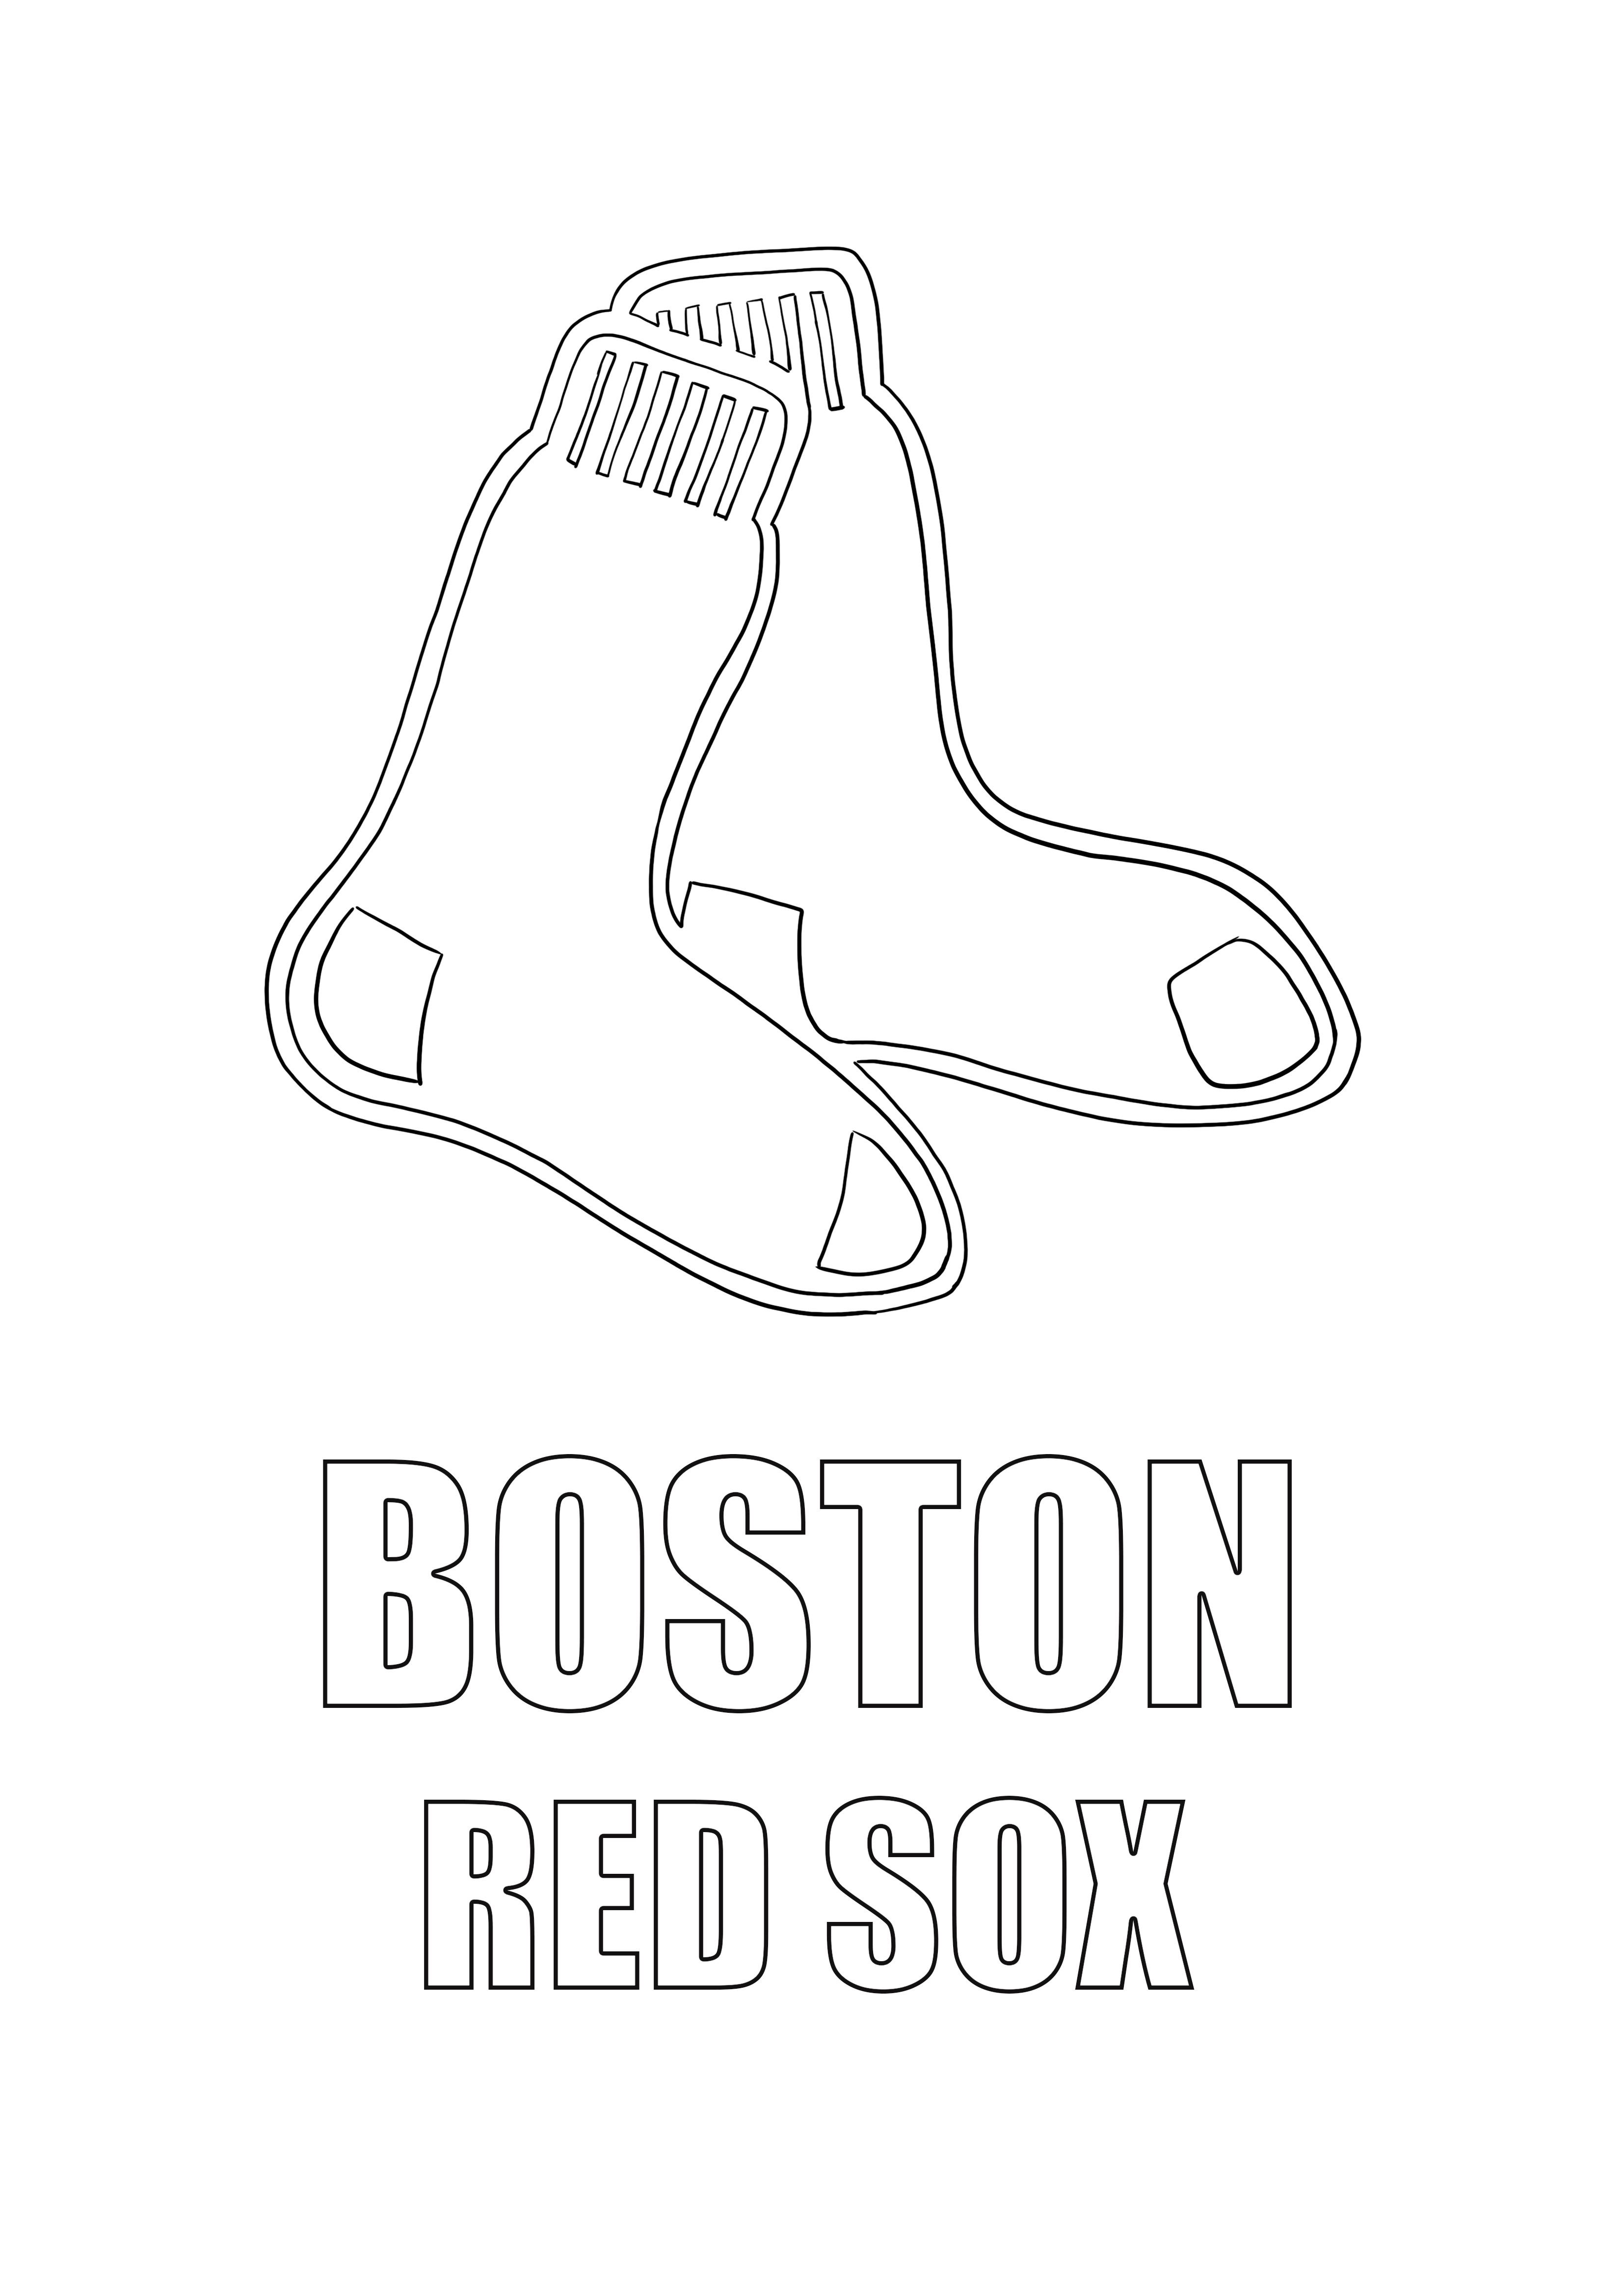 Boston Red Sox logófestés gyerekeknek ingyen